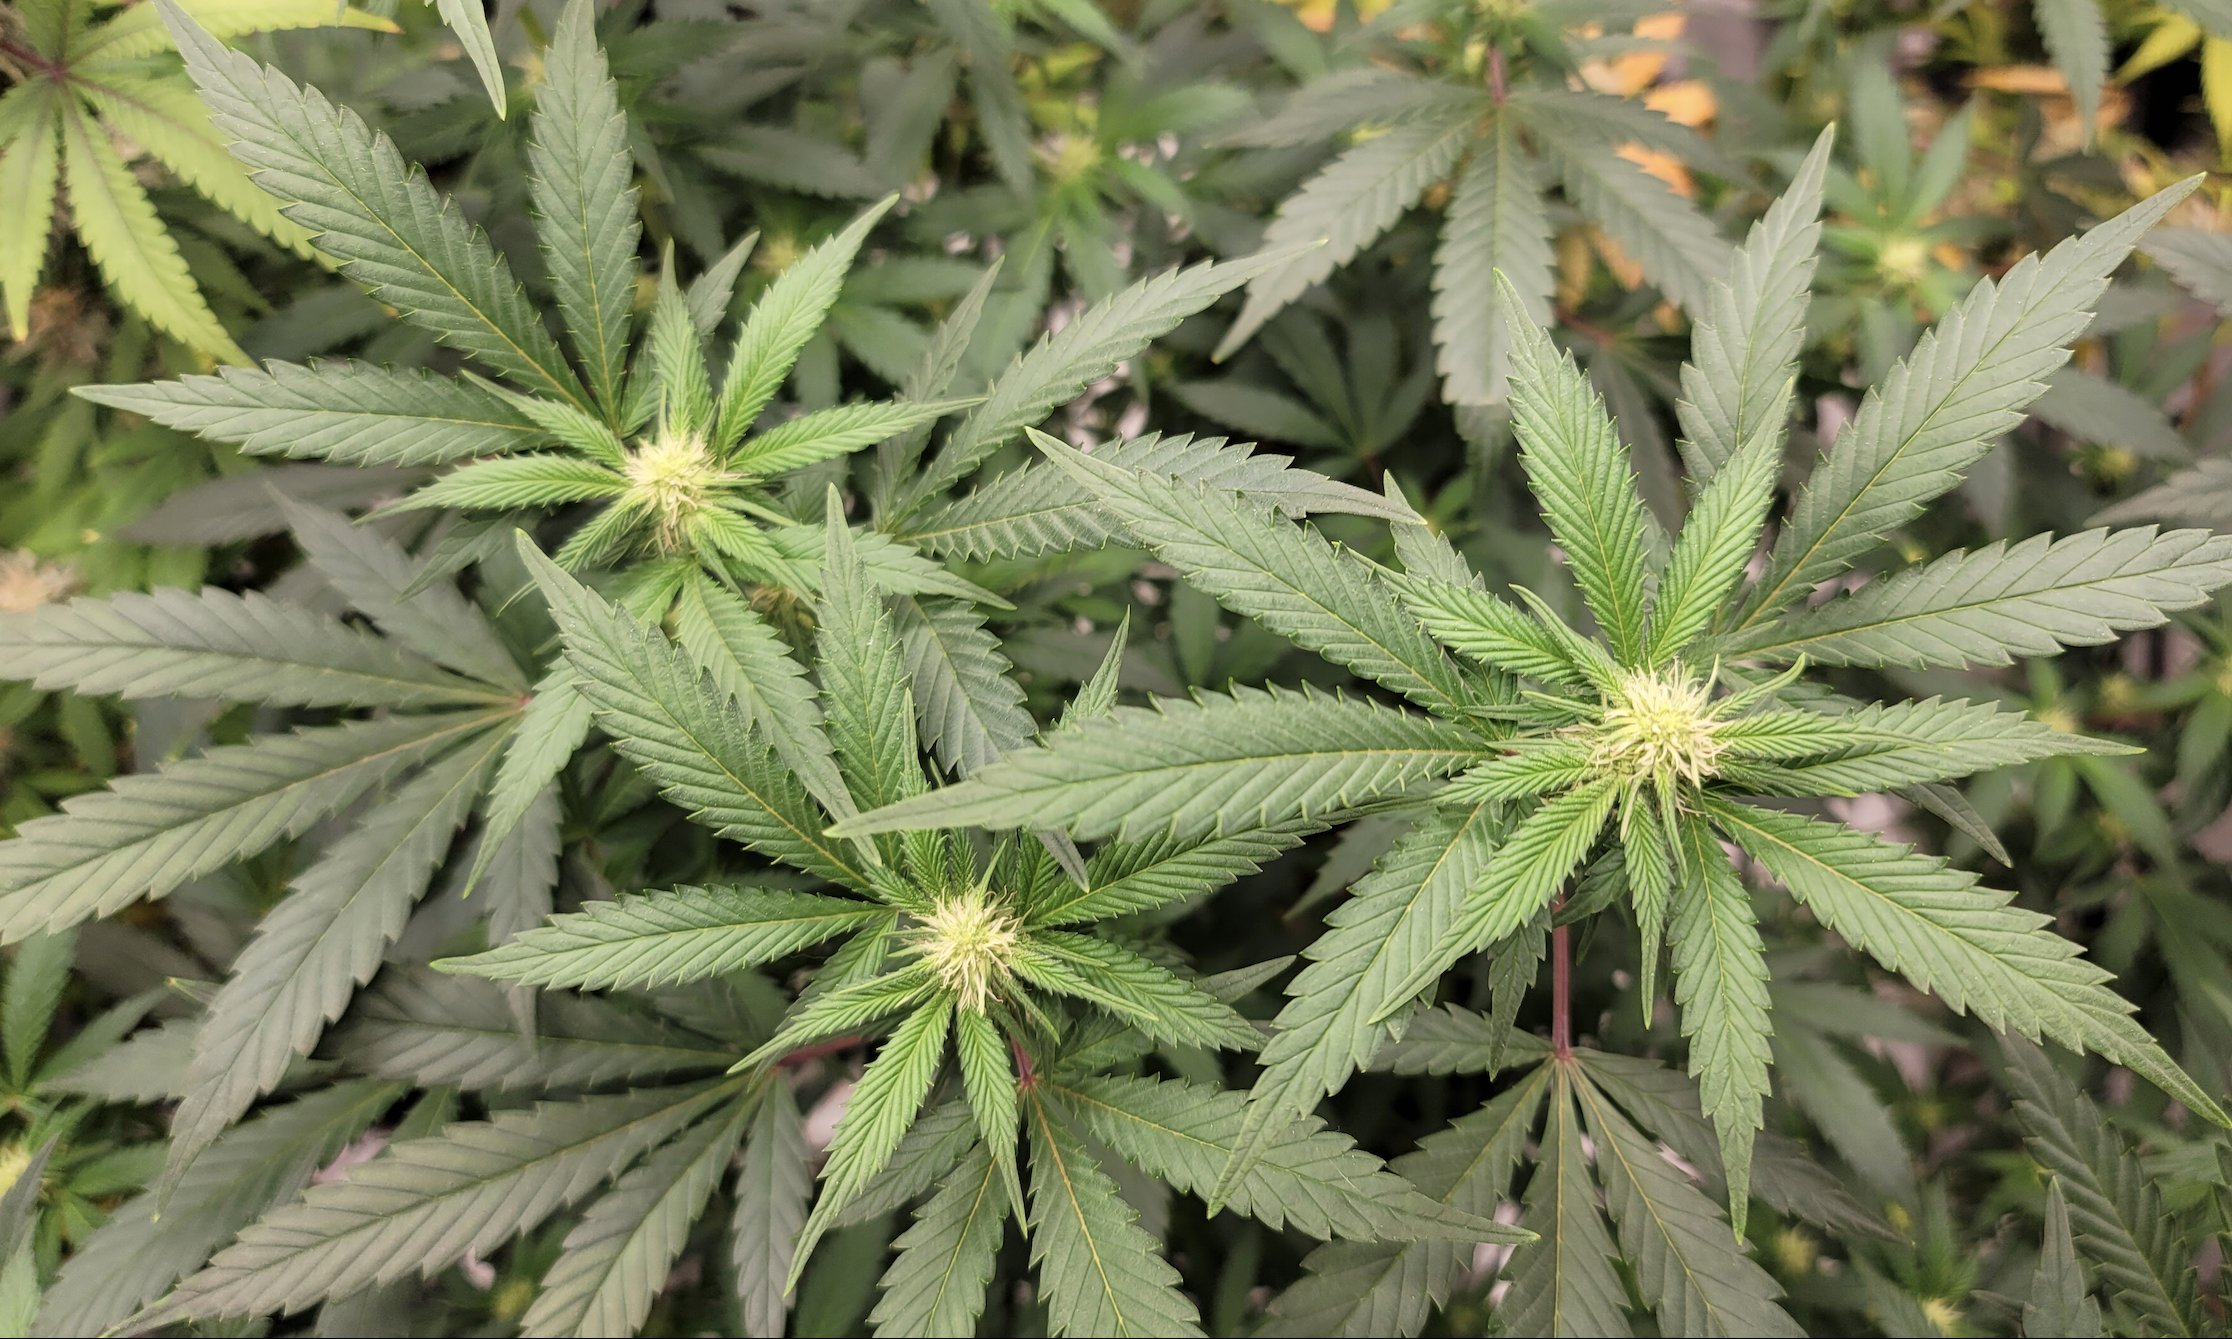 Legal weed in Missouri: How recreational marijuana is going so far